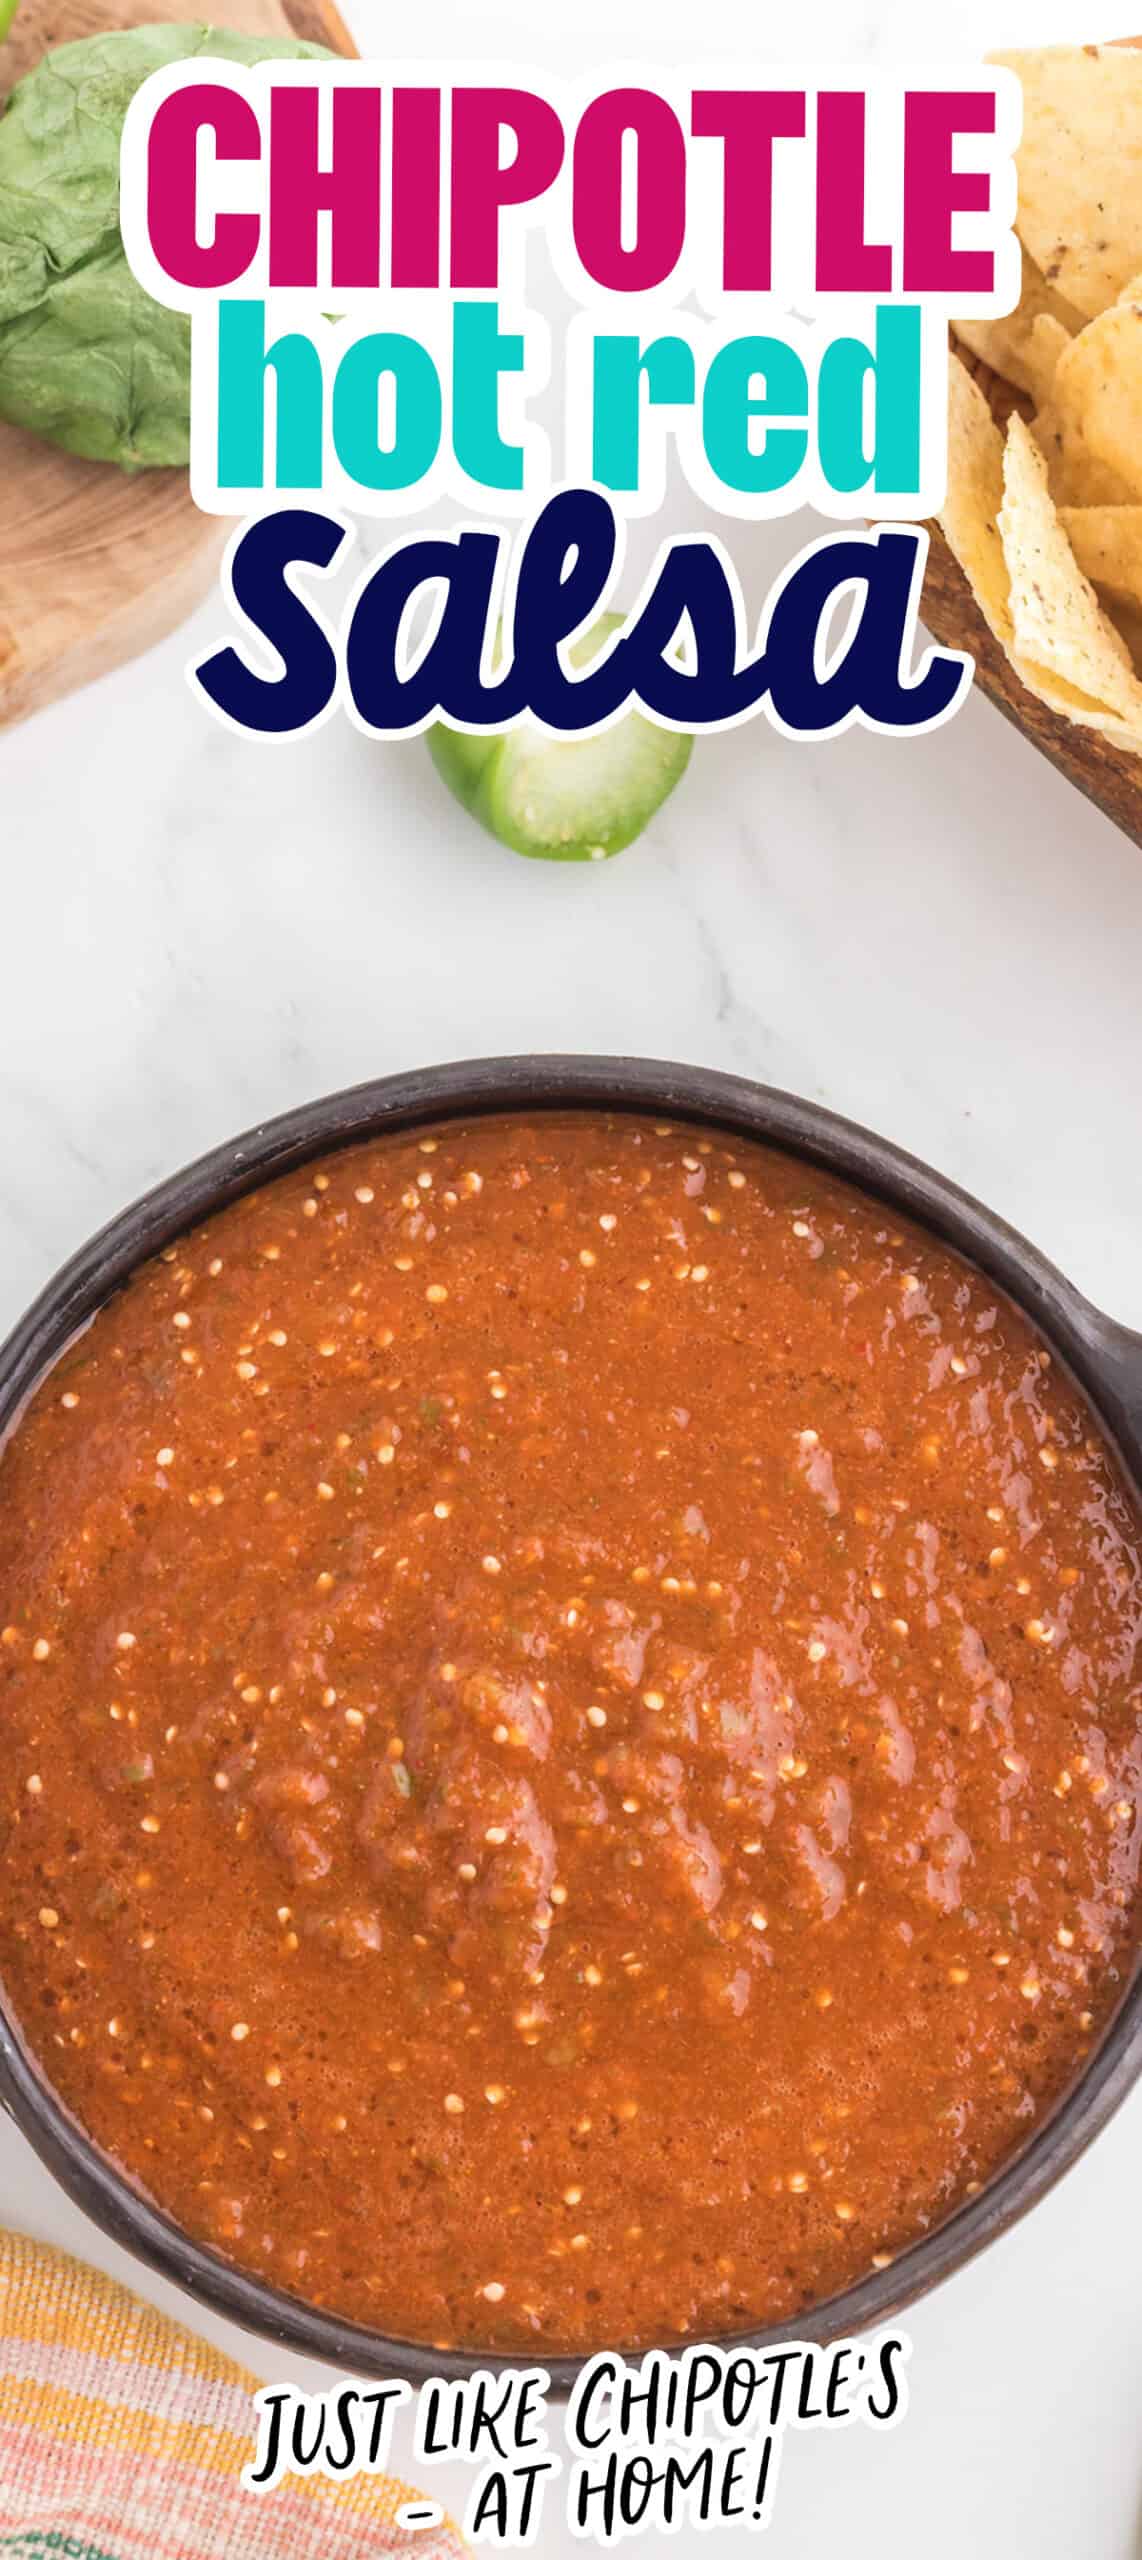 Chipotle hot salsa